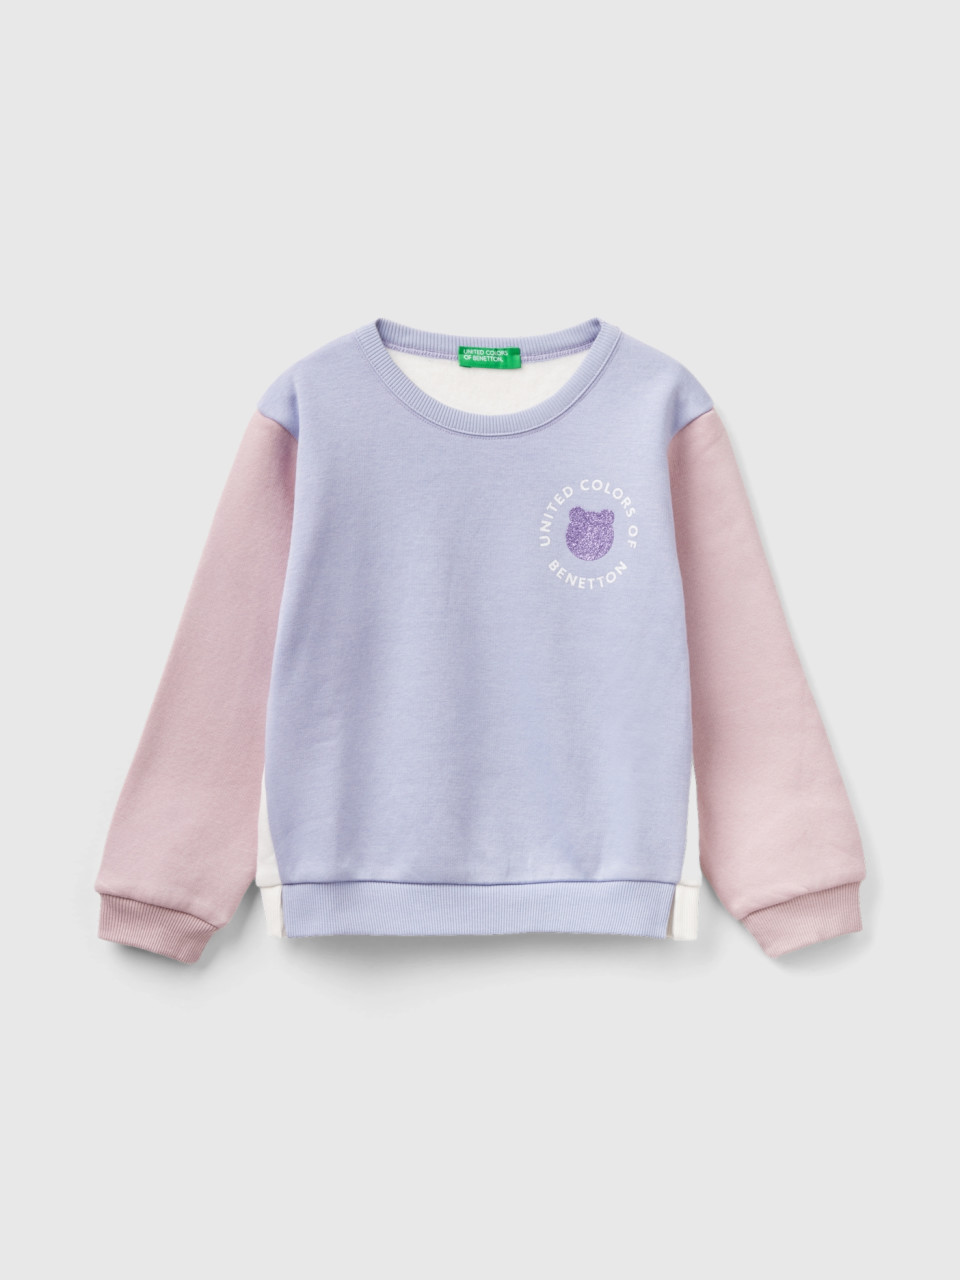 Benetton, Pullover Sweatshirt With Glittery Print, Multi-color, Kids